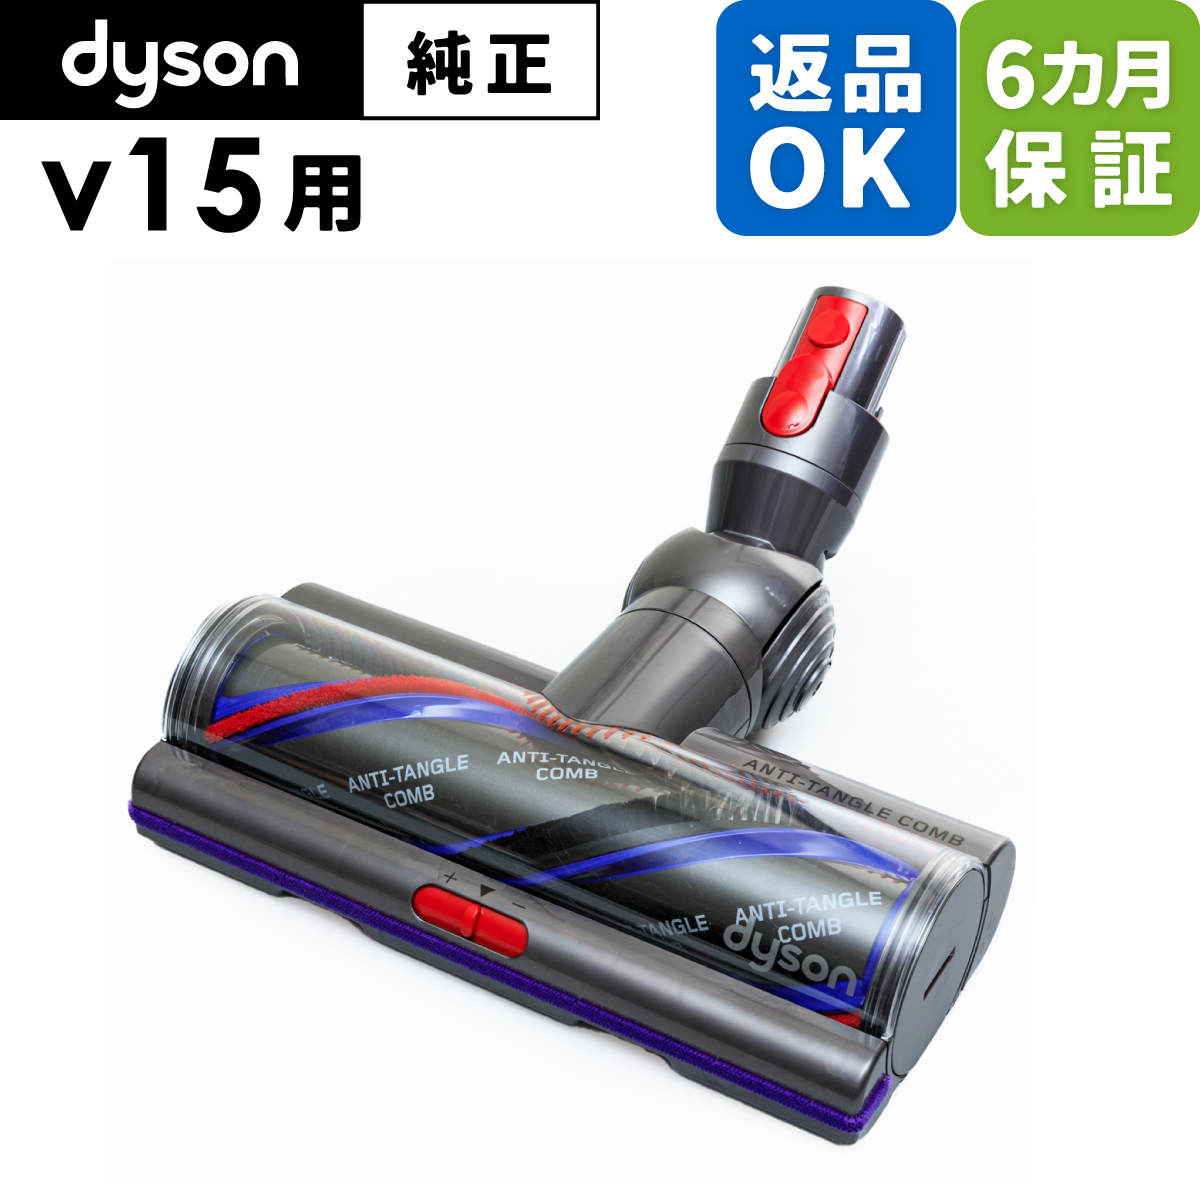 Dyson ダイソン 掃除機 純正 パーツ 返品OK 6カ月保証 デジタル モーターバークリーナーヘッド V15 Detect 適合 モデル 部品 交換